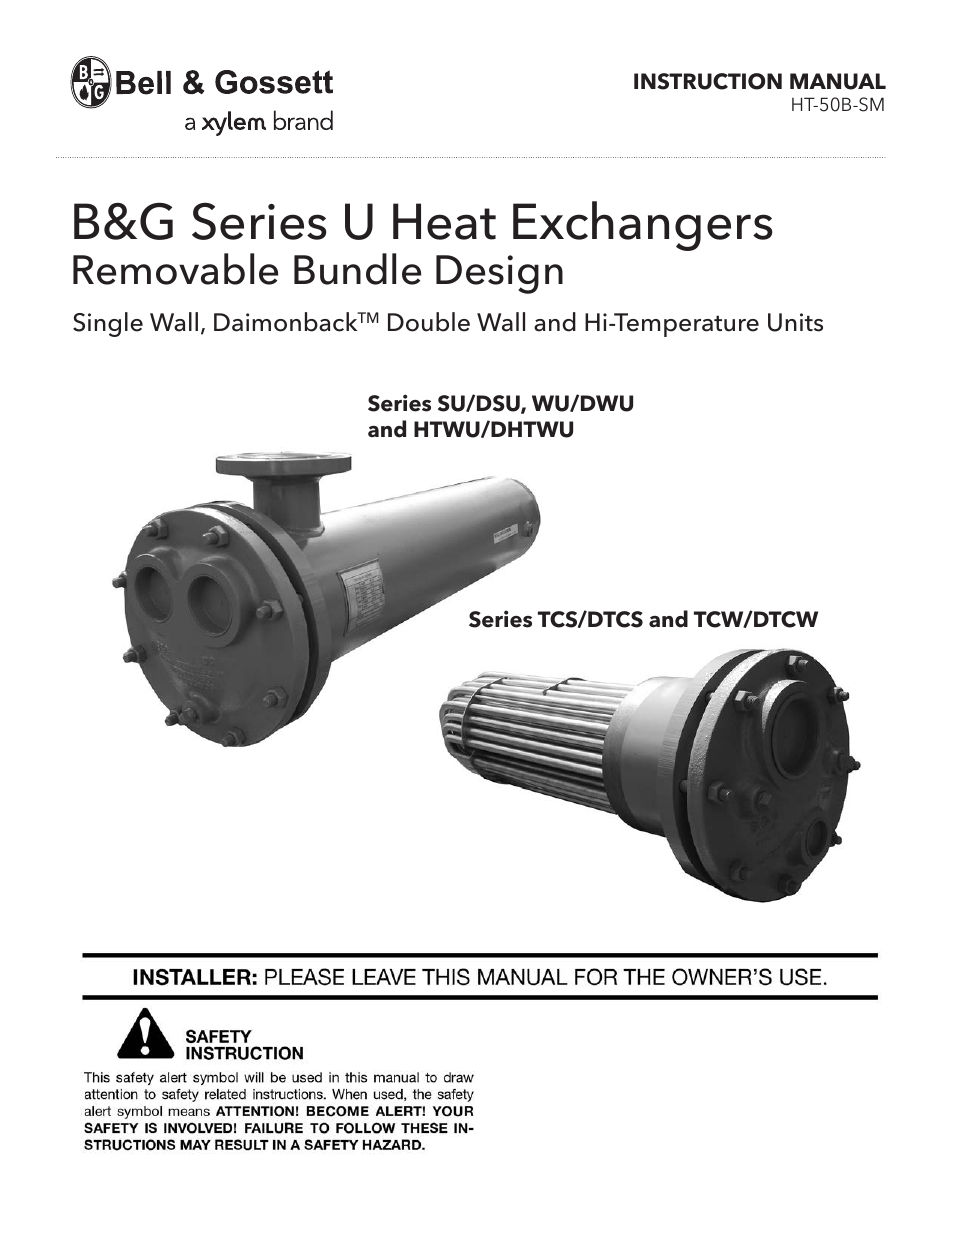 HT 50B SM B&G Series U Heat Exchangers Removable Bundle Design